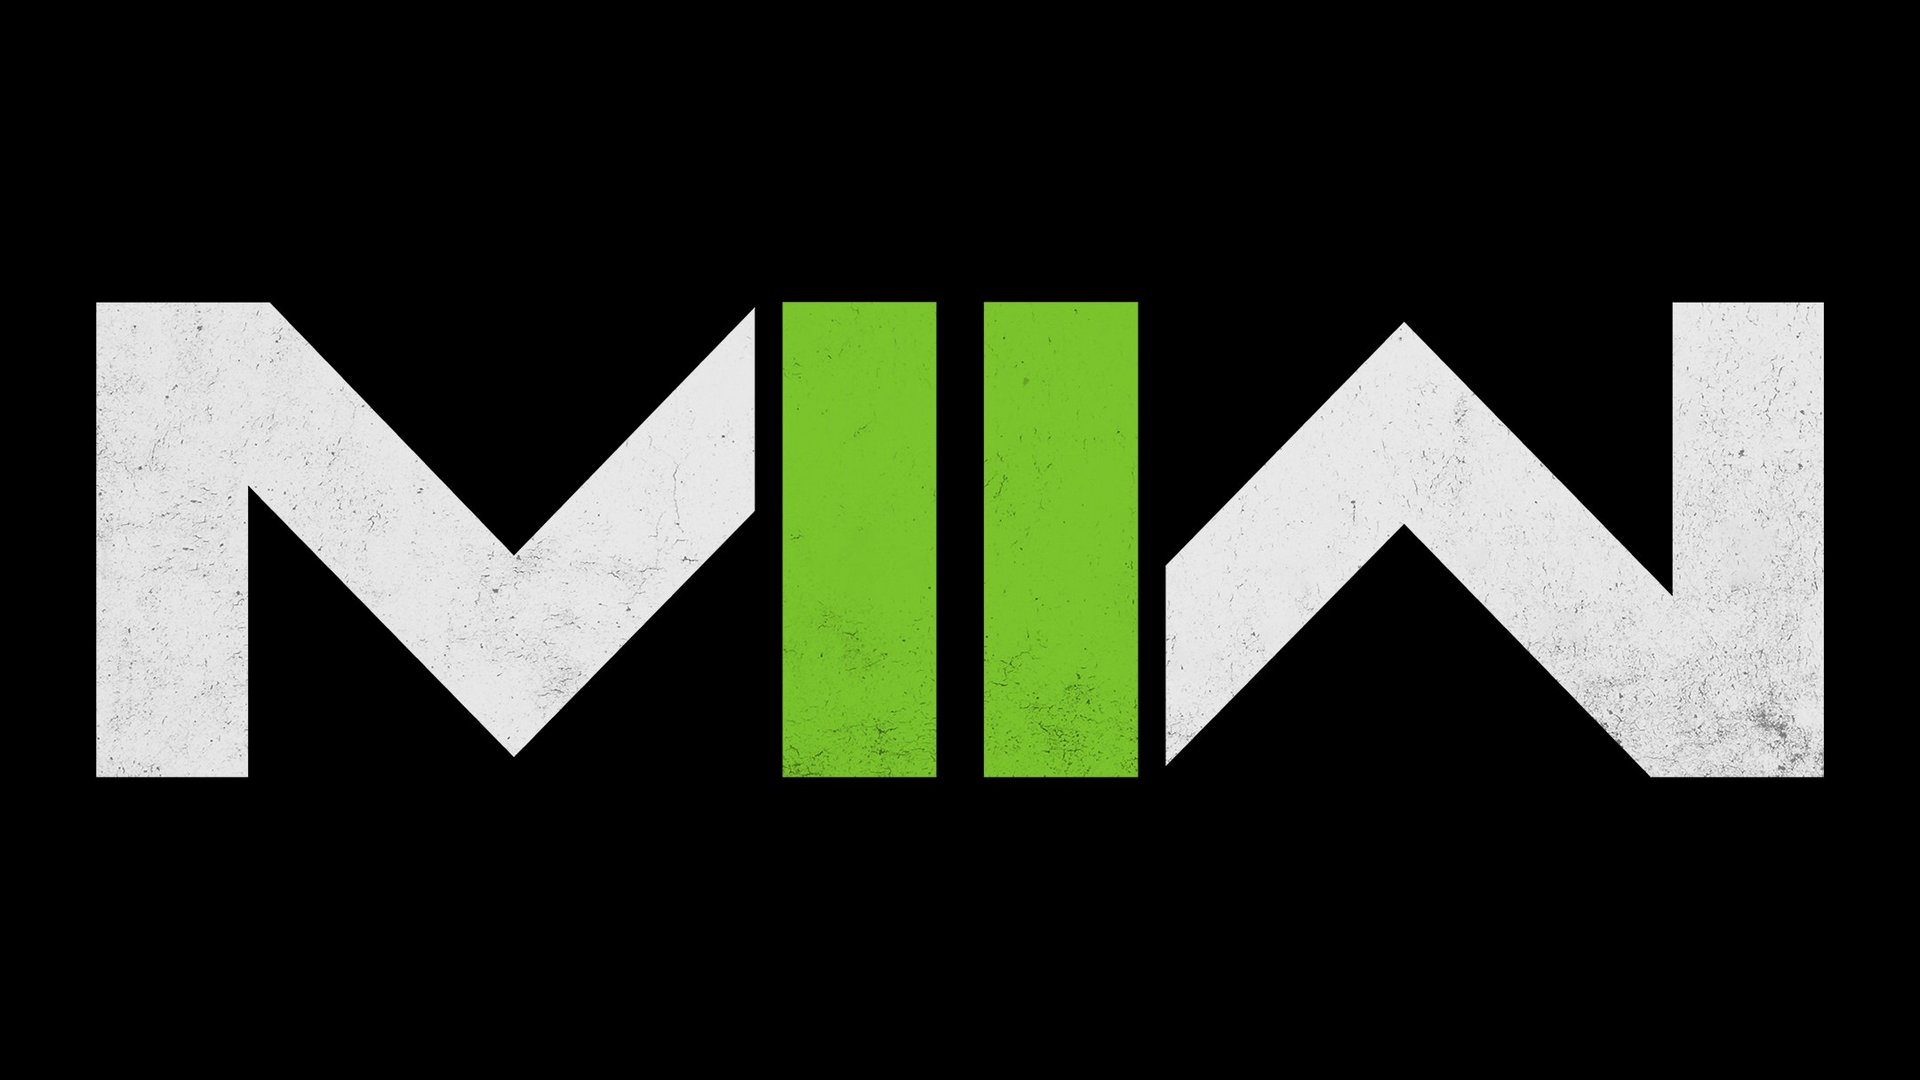 Infinity Ward showed the logo for Call of Duty: Modern Warfare 2